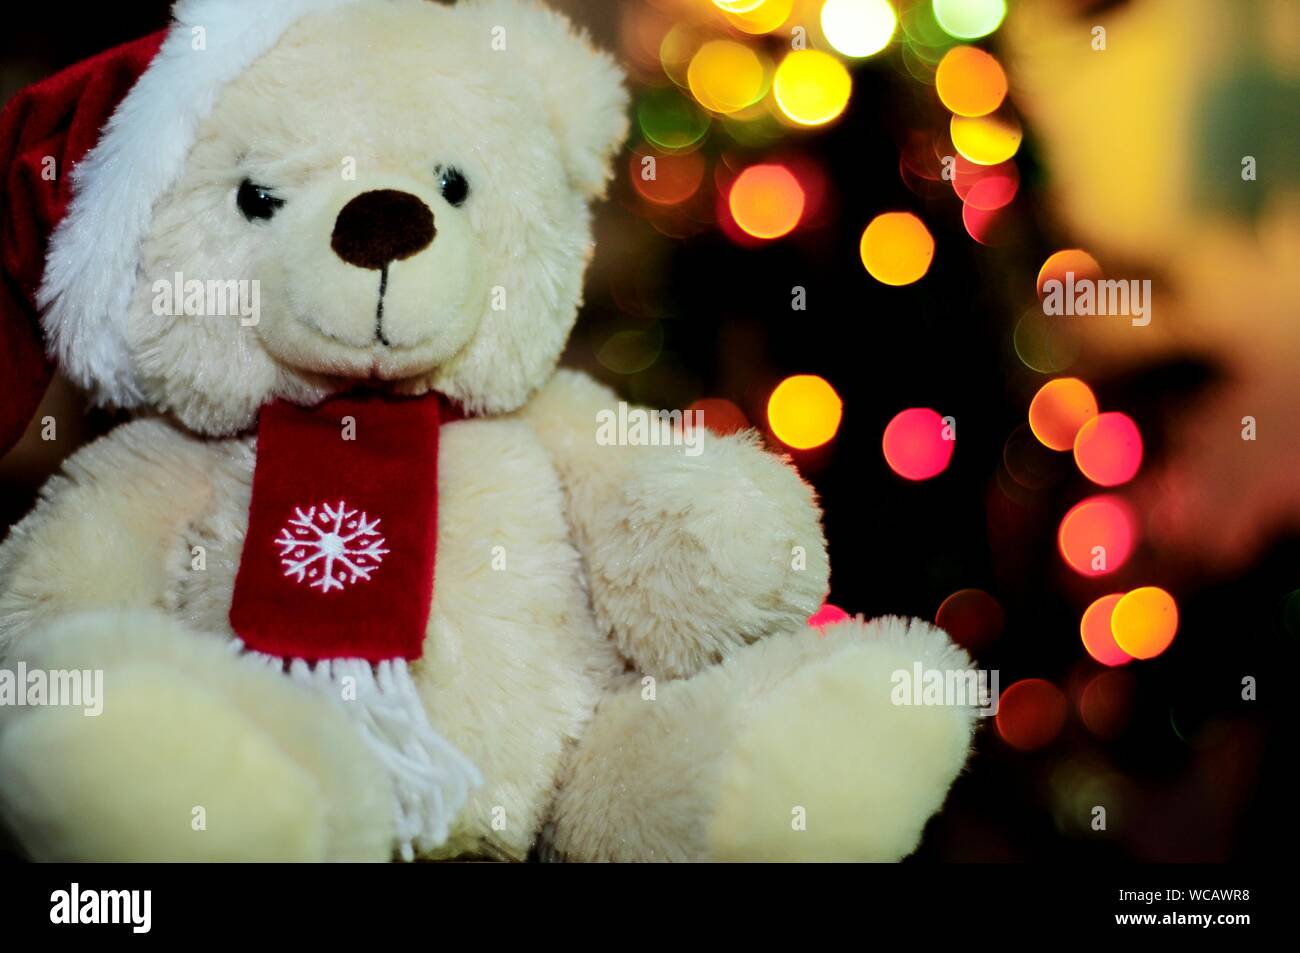 Close-up Of Teddy Bear Against Illuminated Christmas Lights At ...